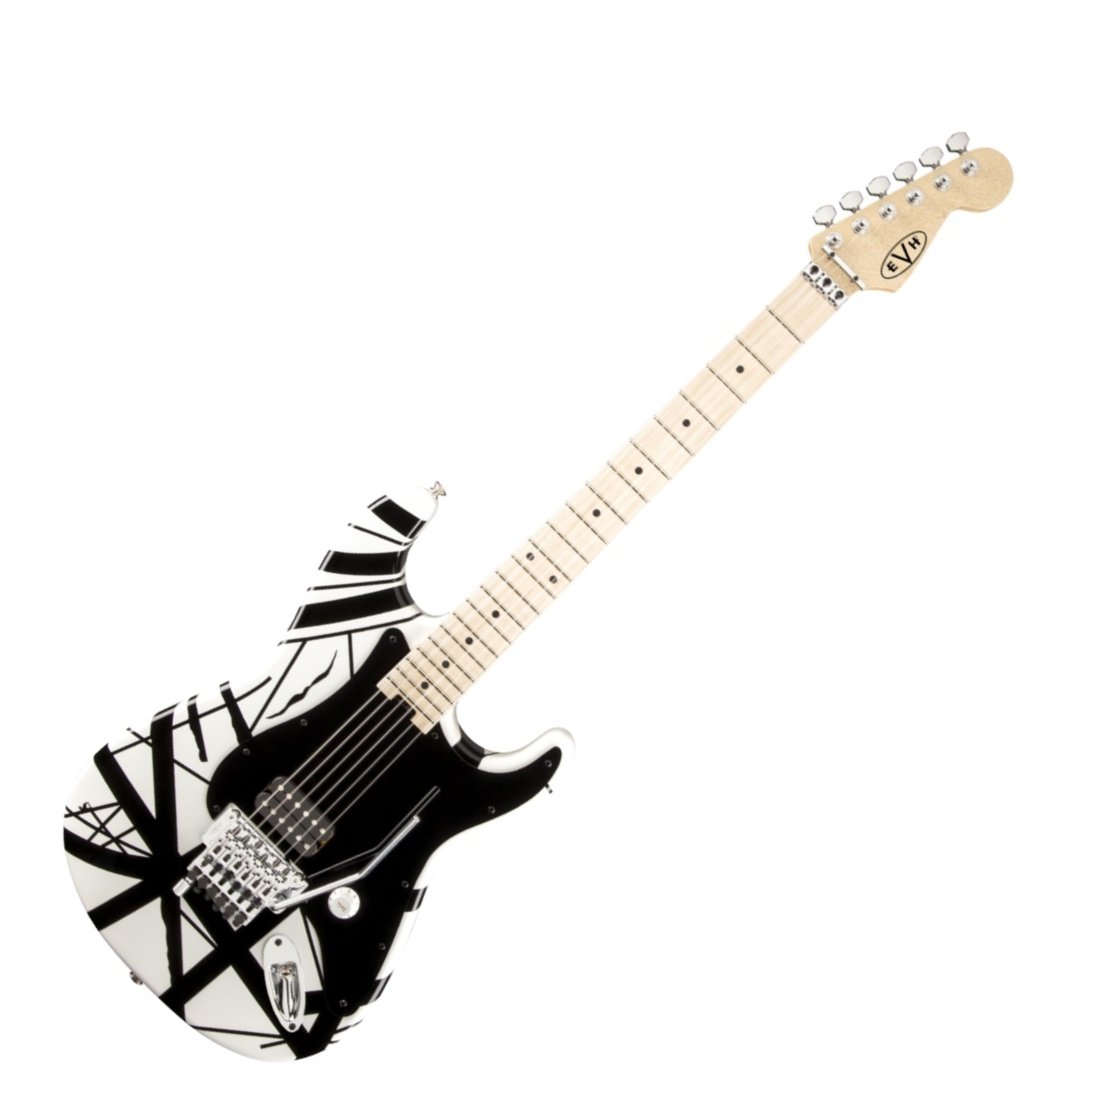 EVH Eddie Van Halen Striped Series Electric Guitar at zZounds